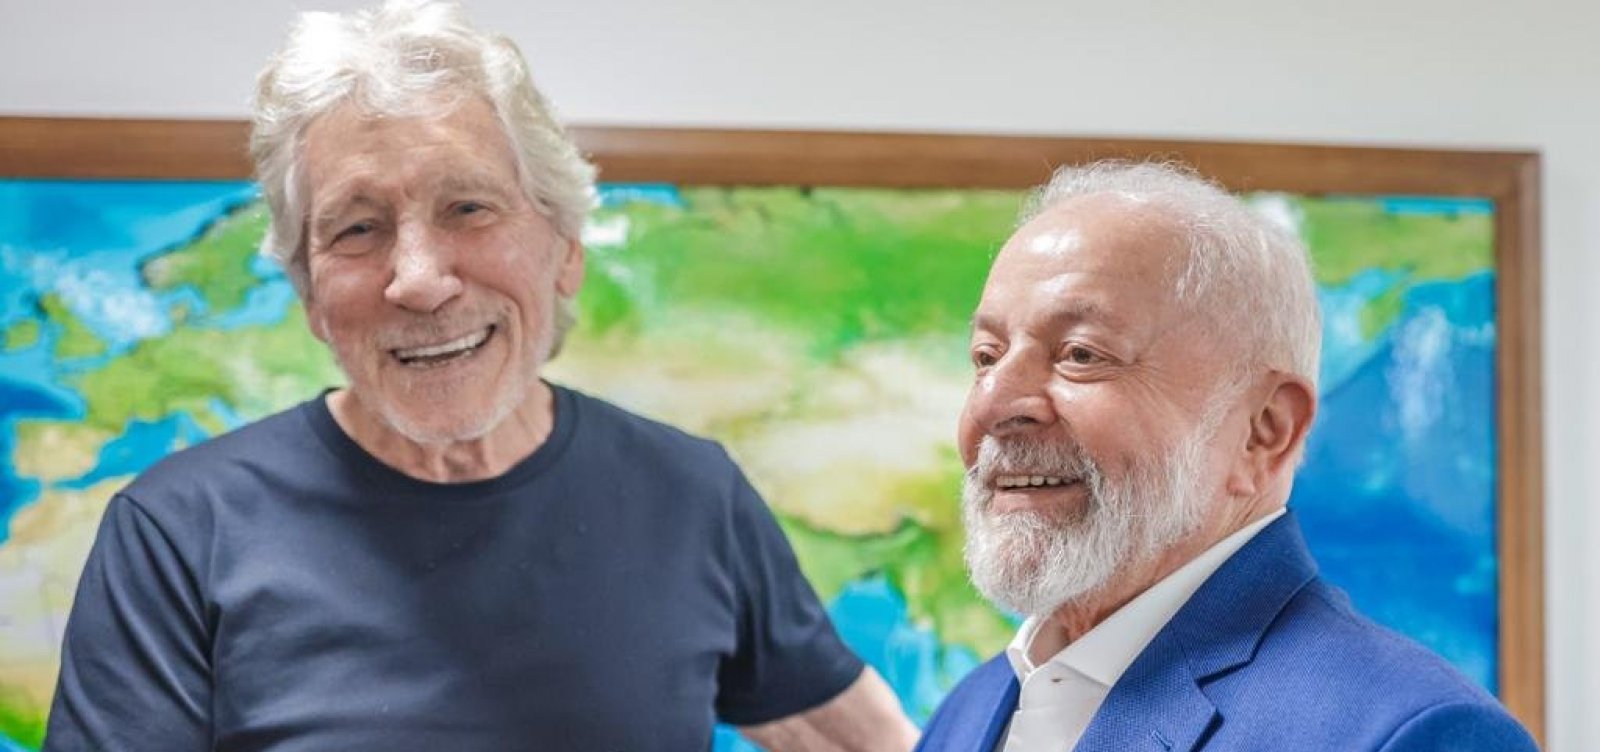 Em turnê no Brasil, cantor britânico Roger Waters encontra Lula no Palácio do Planalto